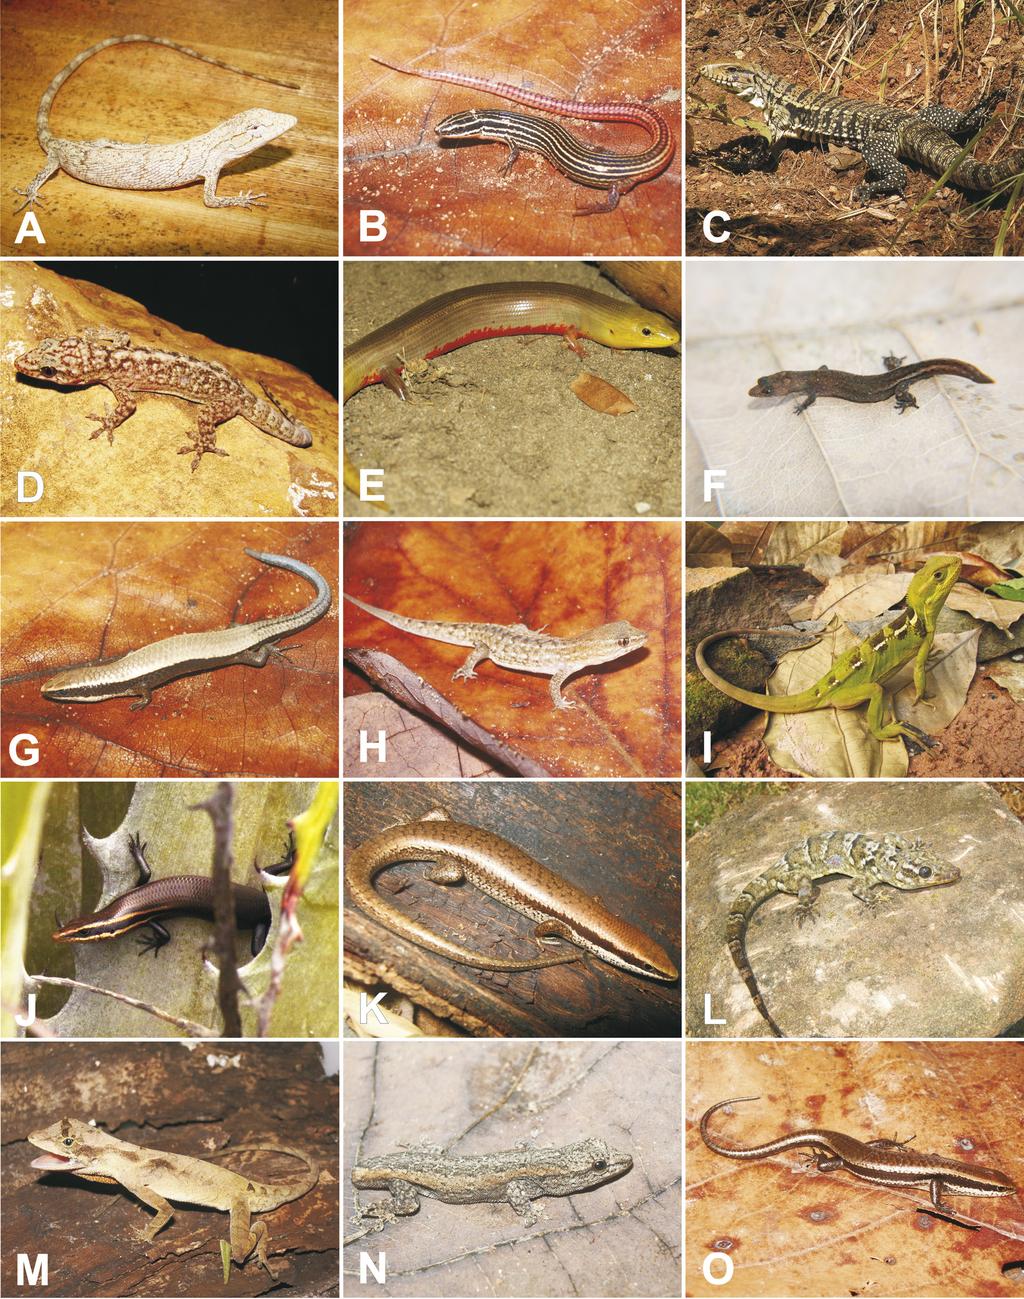 Samuel Cardozo Ribeiro et al. Fig. 4. Species of lizards from the Araripe bioregion, northeastern Brazil.